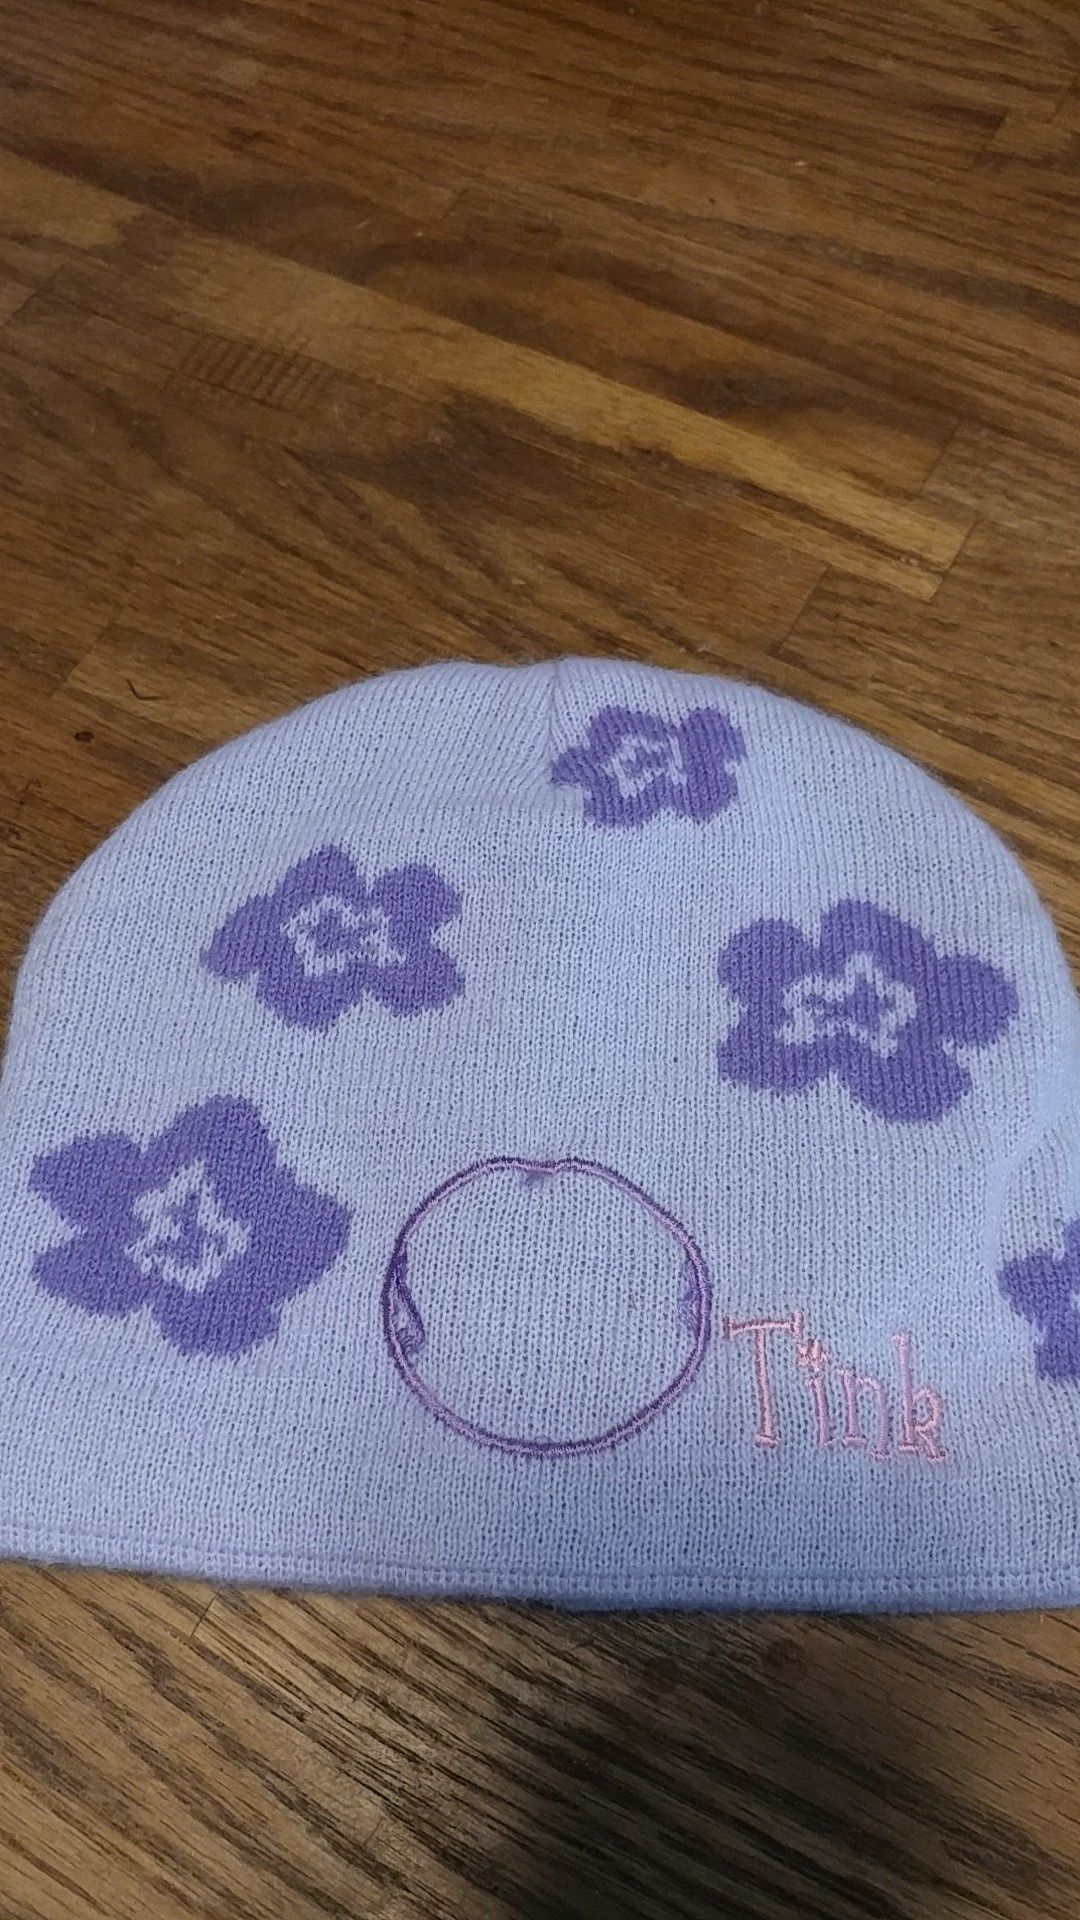 Toddler purple "Tink" hat